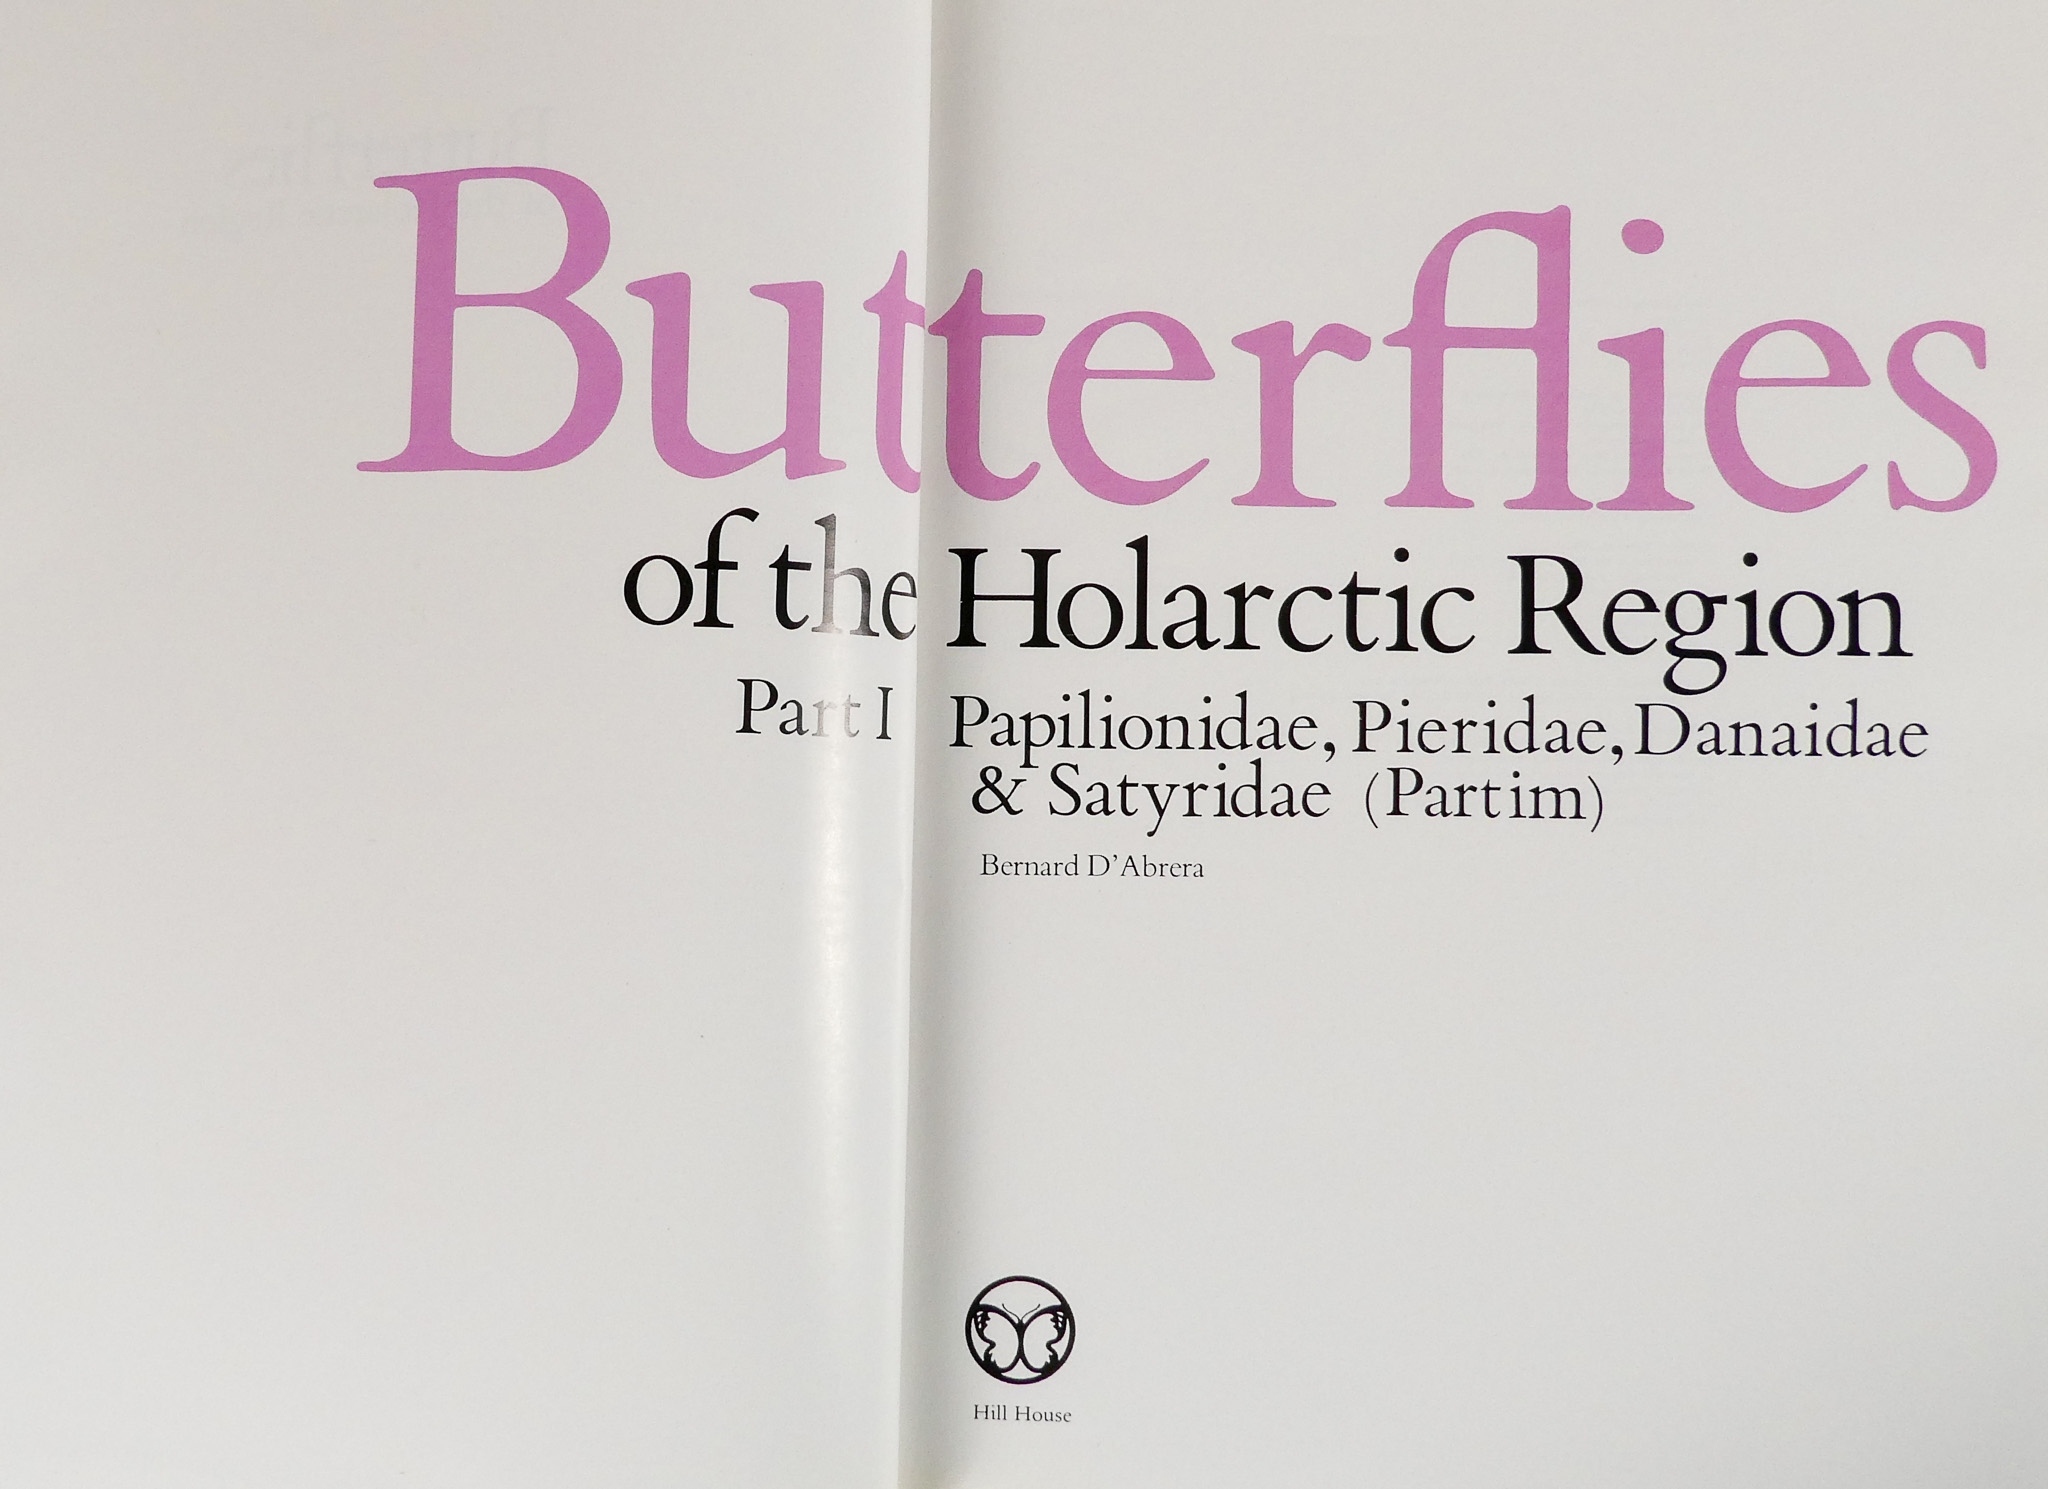 D'ABRERA Bernard, Butterflies of the Holarctic Region - Hill House 1993, three volumes cloth binding - Image 3 of 10